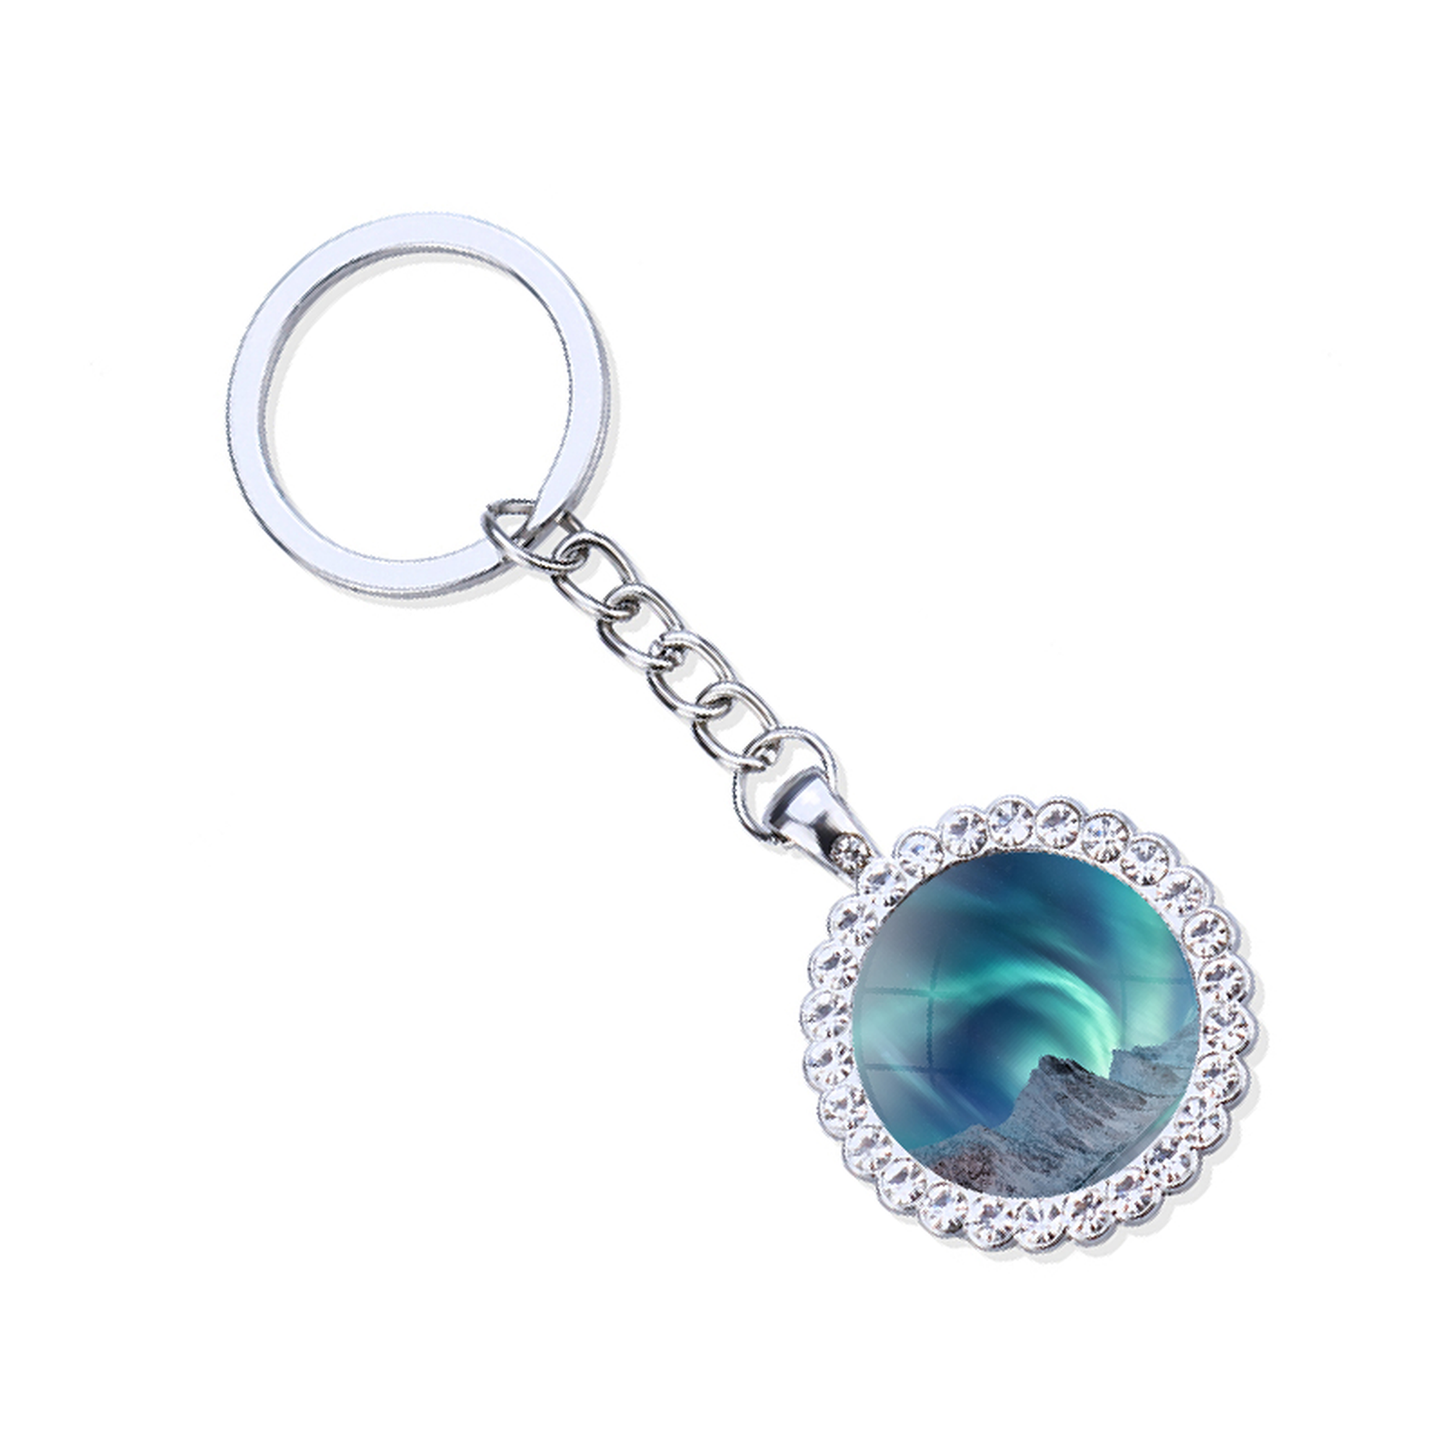 Aurora Borealis Silver Keyring - Northern Light Jewelry - Rhinestones Glass Key Chain - Perfect Aurora Lovers Gift 3